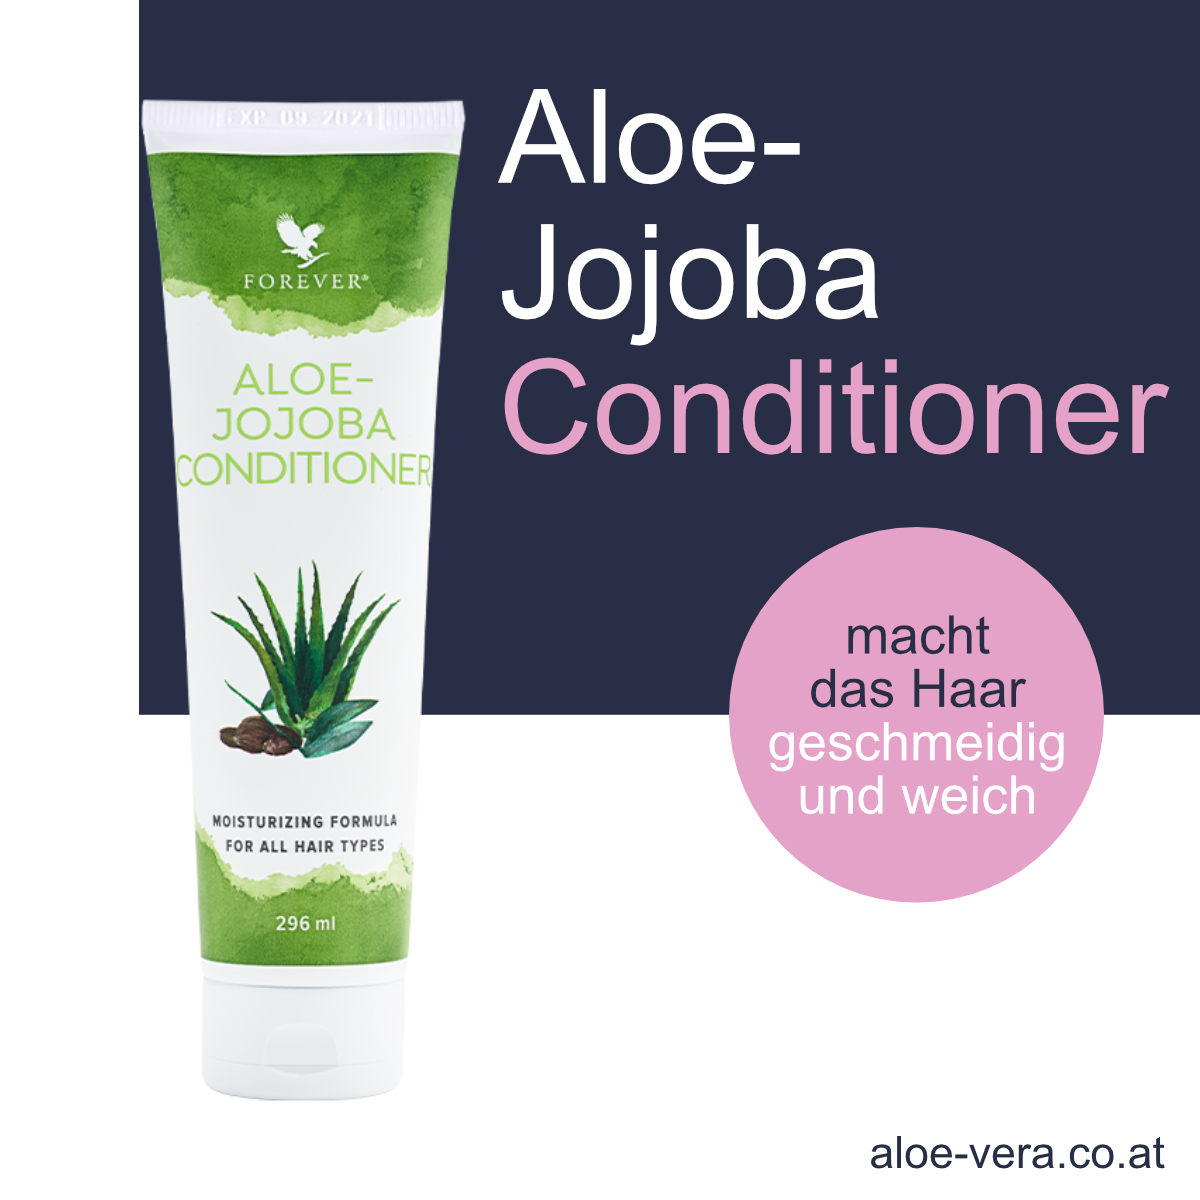 Forever Aloe Vera Jojoba Conditioner Balsam Haarpflege kaufen